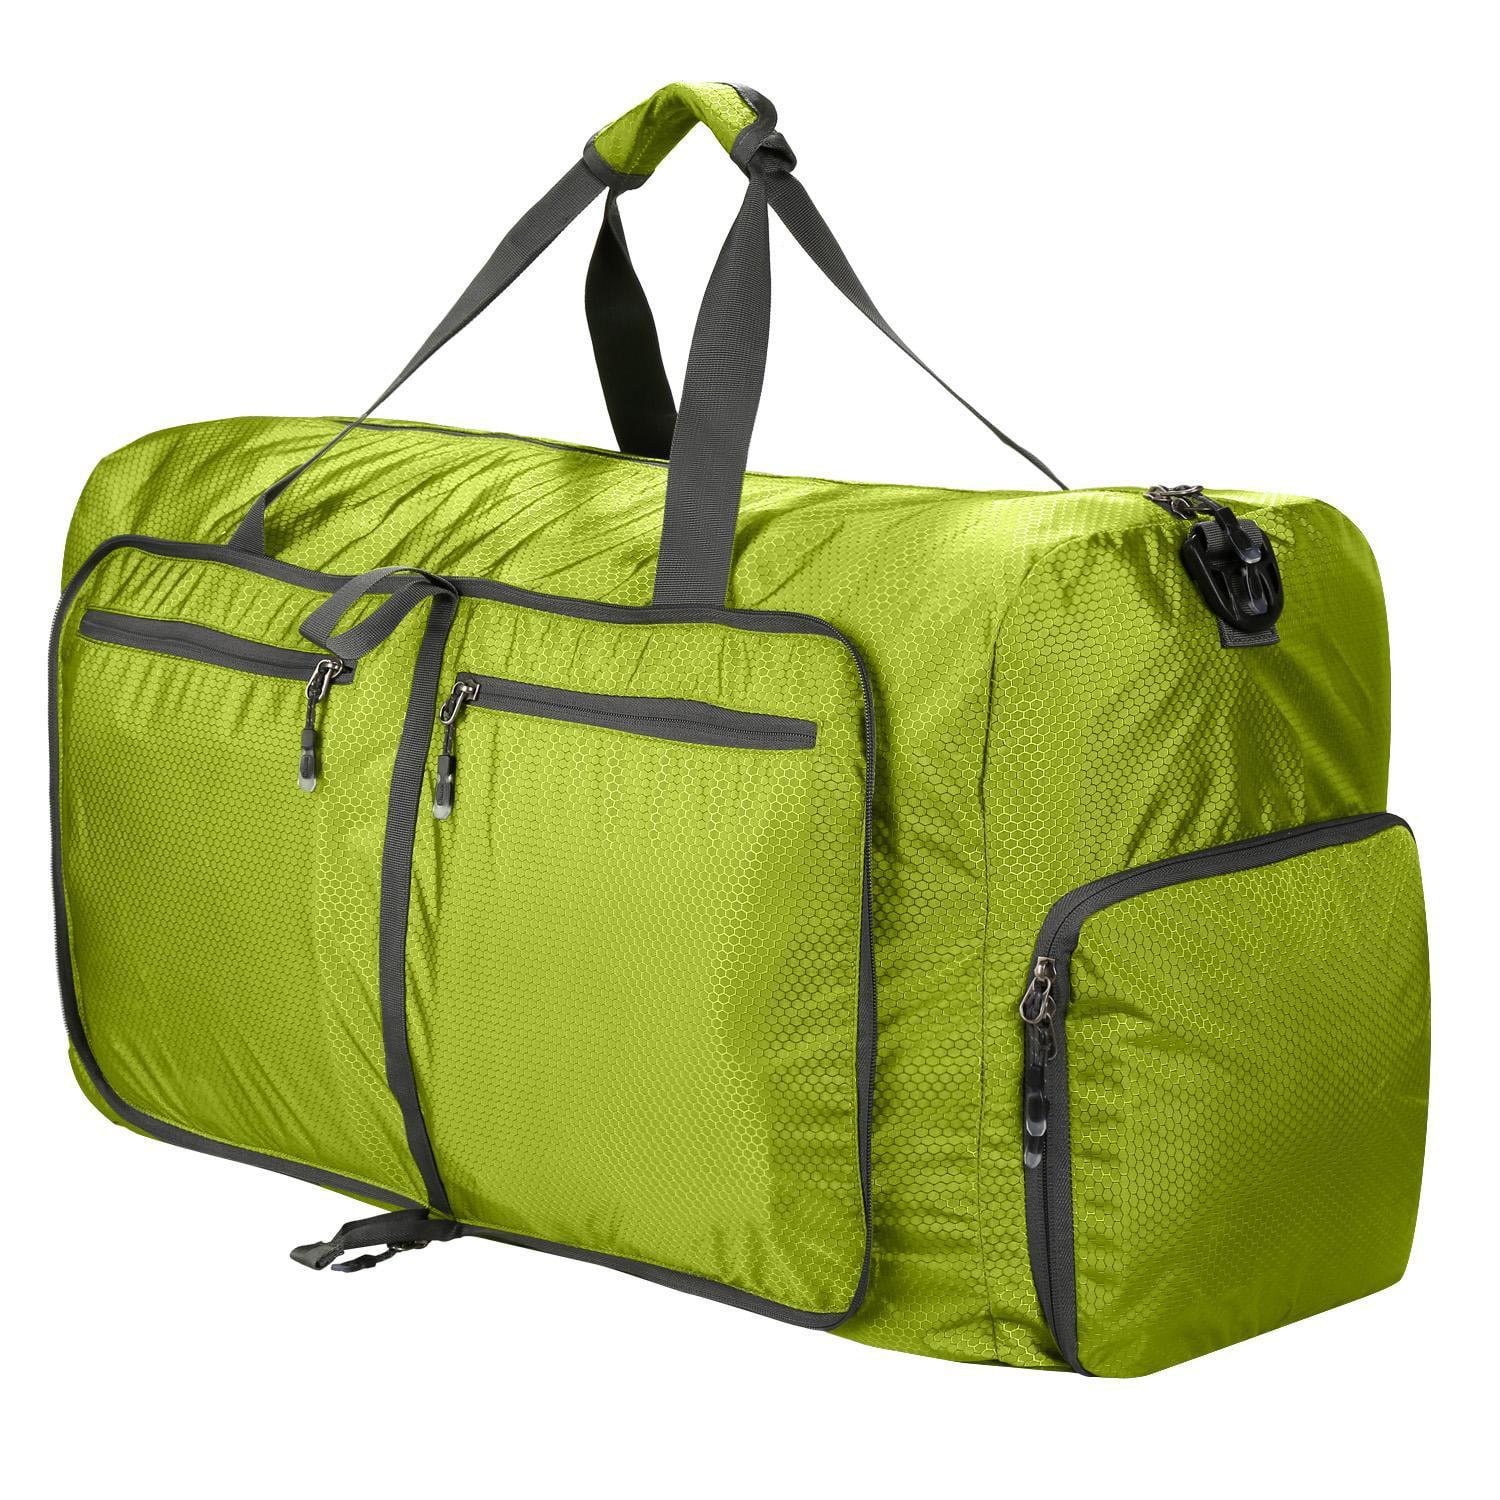 80L Camping Duffel Bag Large Size,Packable Travel Duffle Bags for Men and Women,Waterproof ...